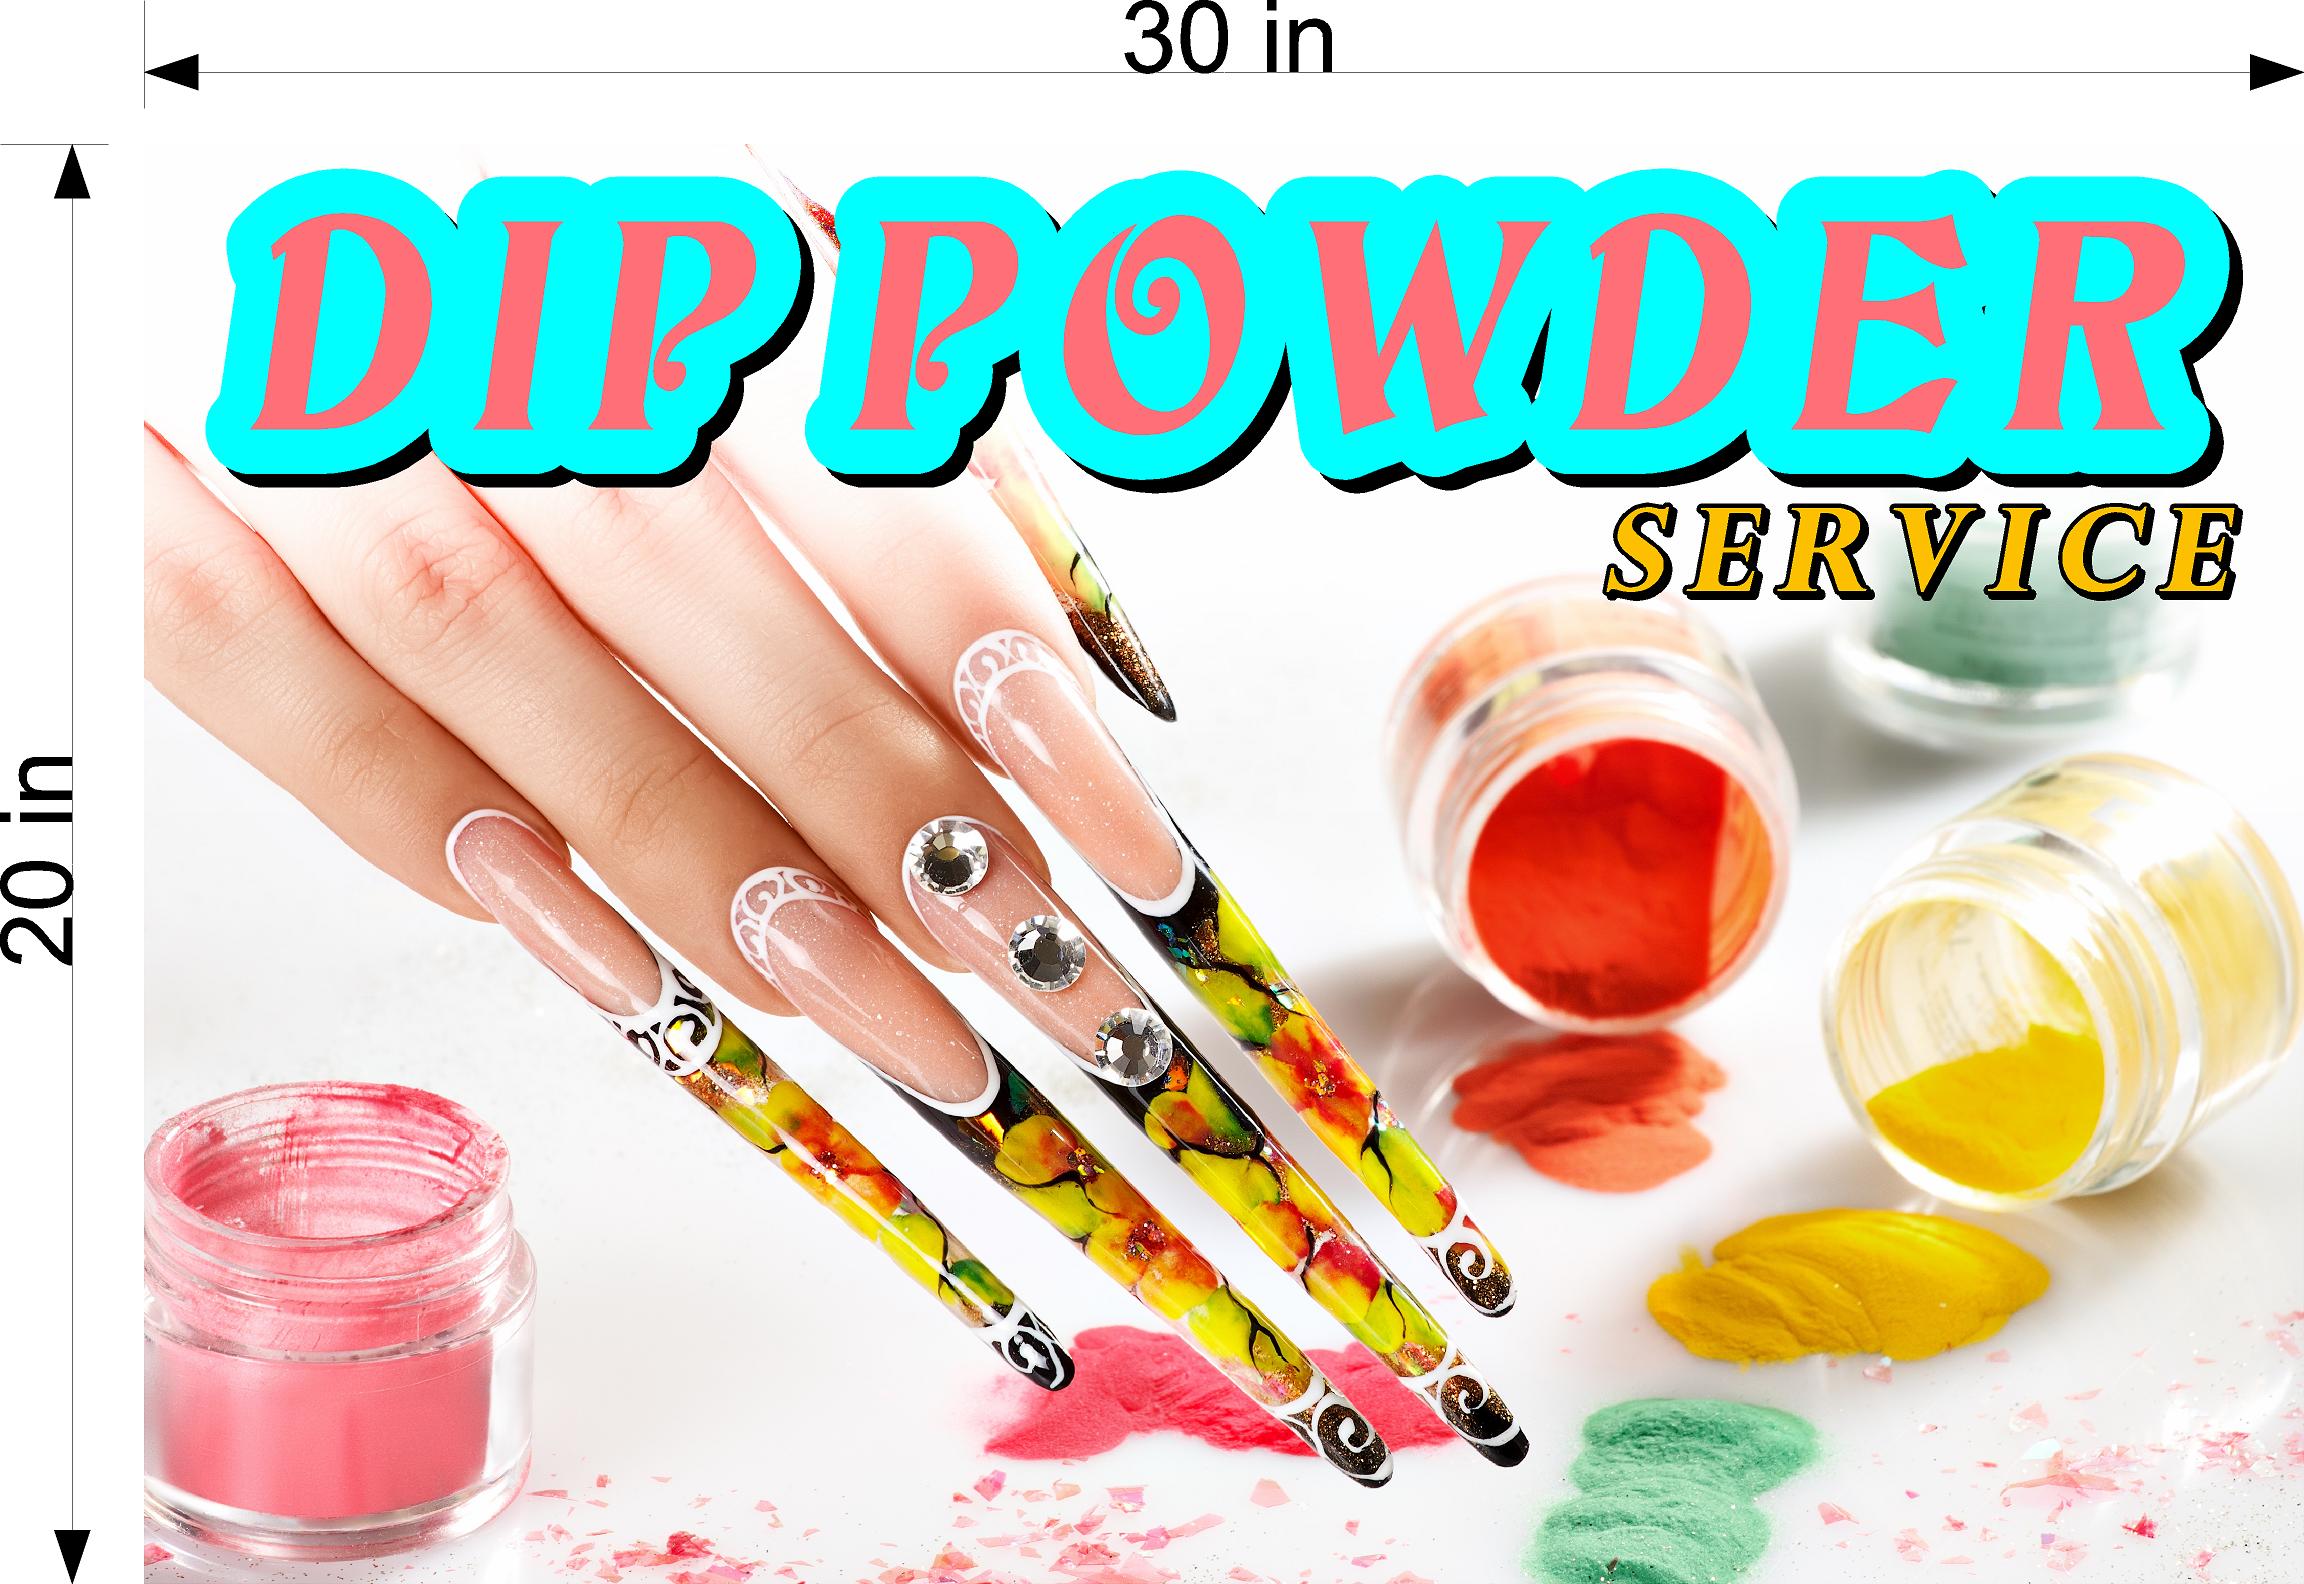 Dip Powder 10 Wallpaper Poster Decal with Adhesive Backing Wall Sticker Decor Nail Salon Sign Horizontal